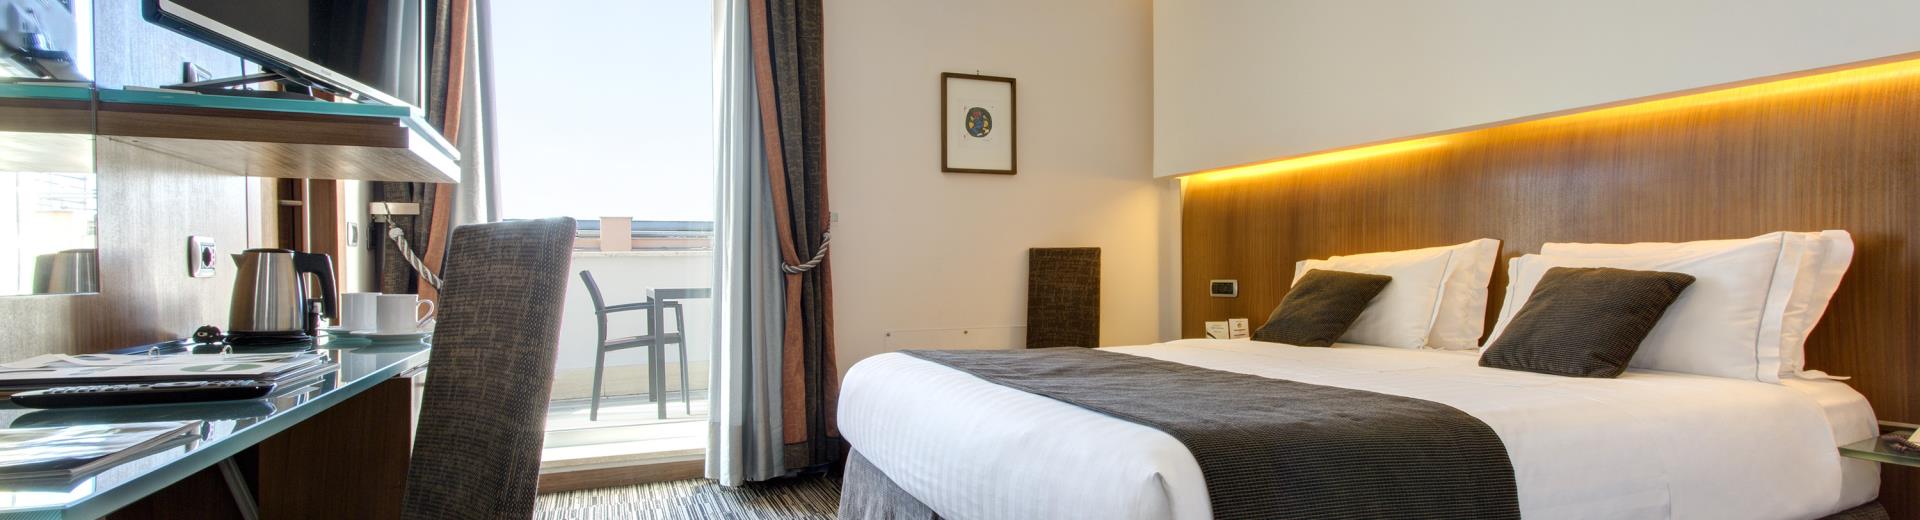 Superior Room-Best Western Hotel Universo Roma 4 stars